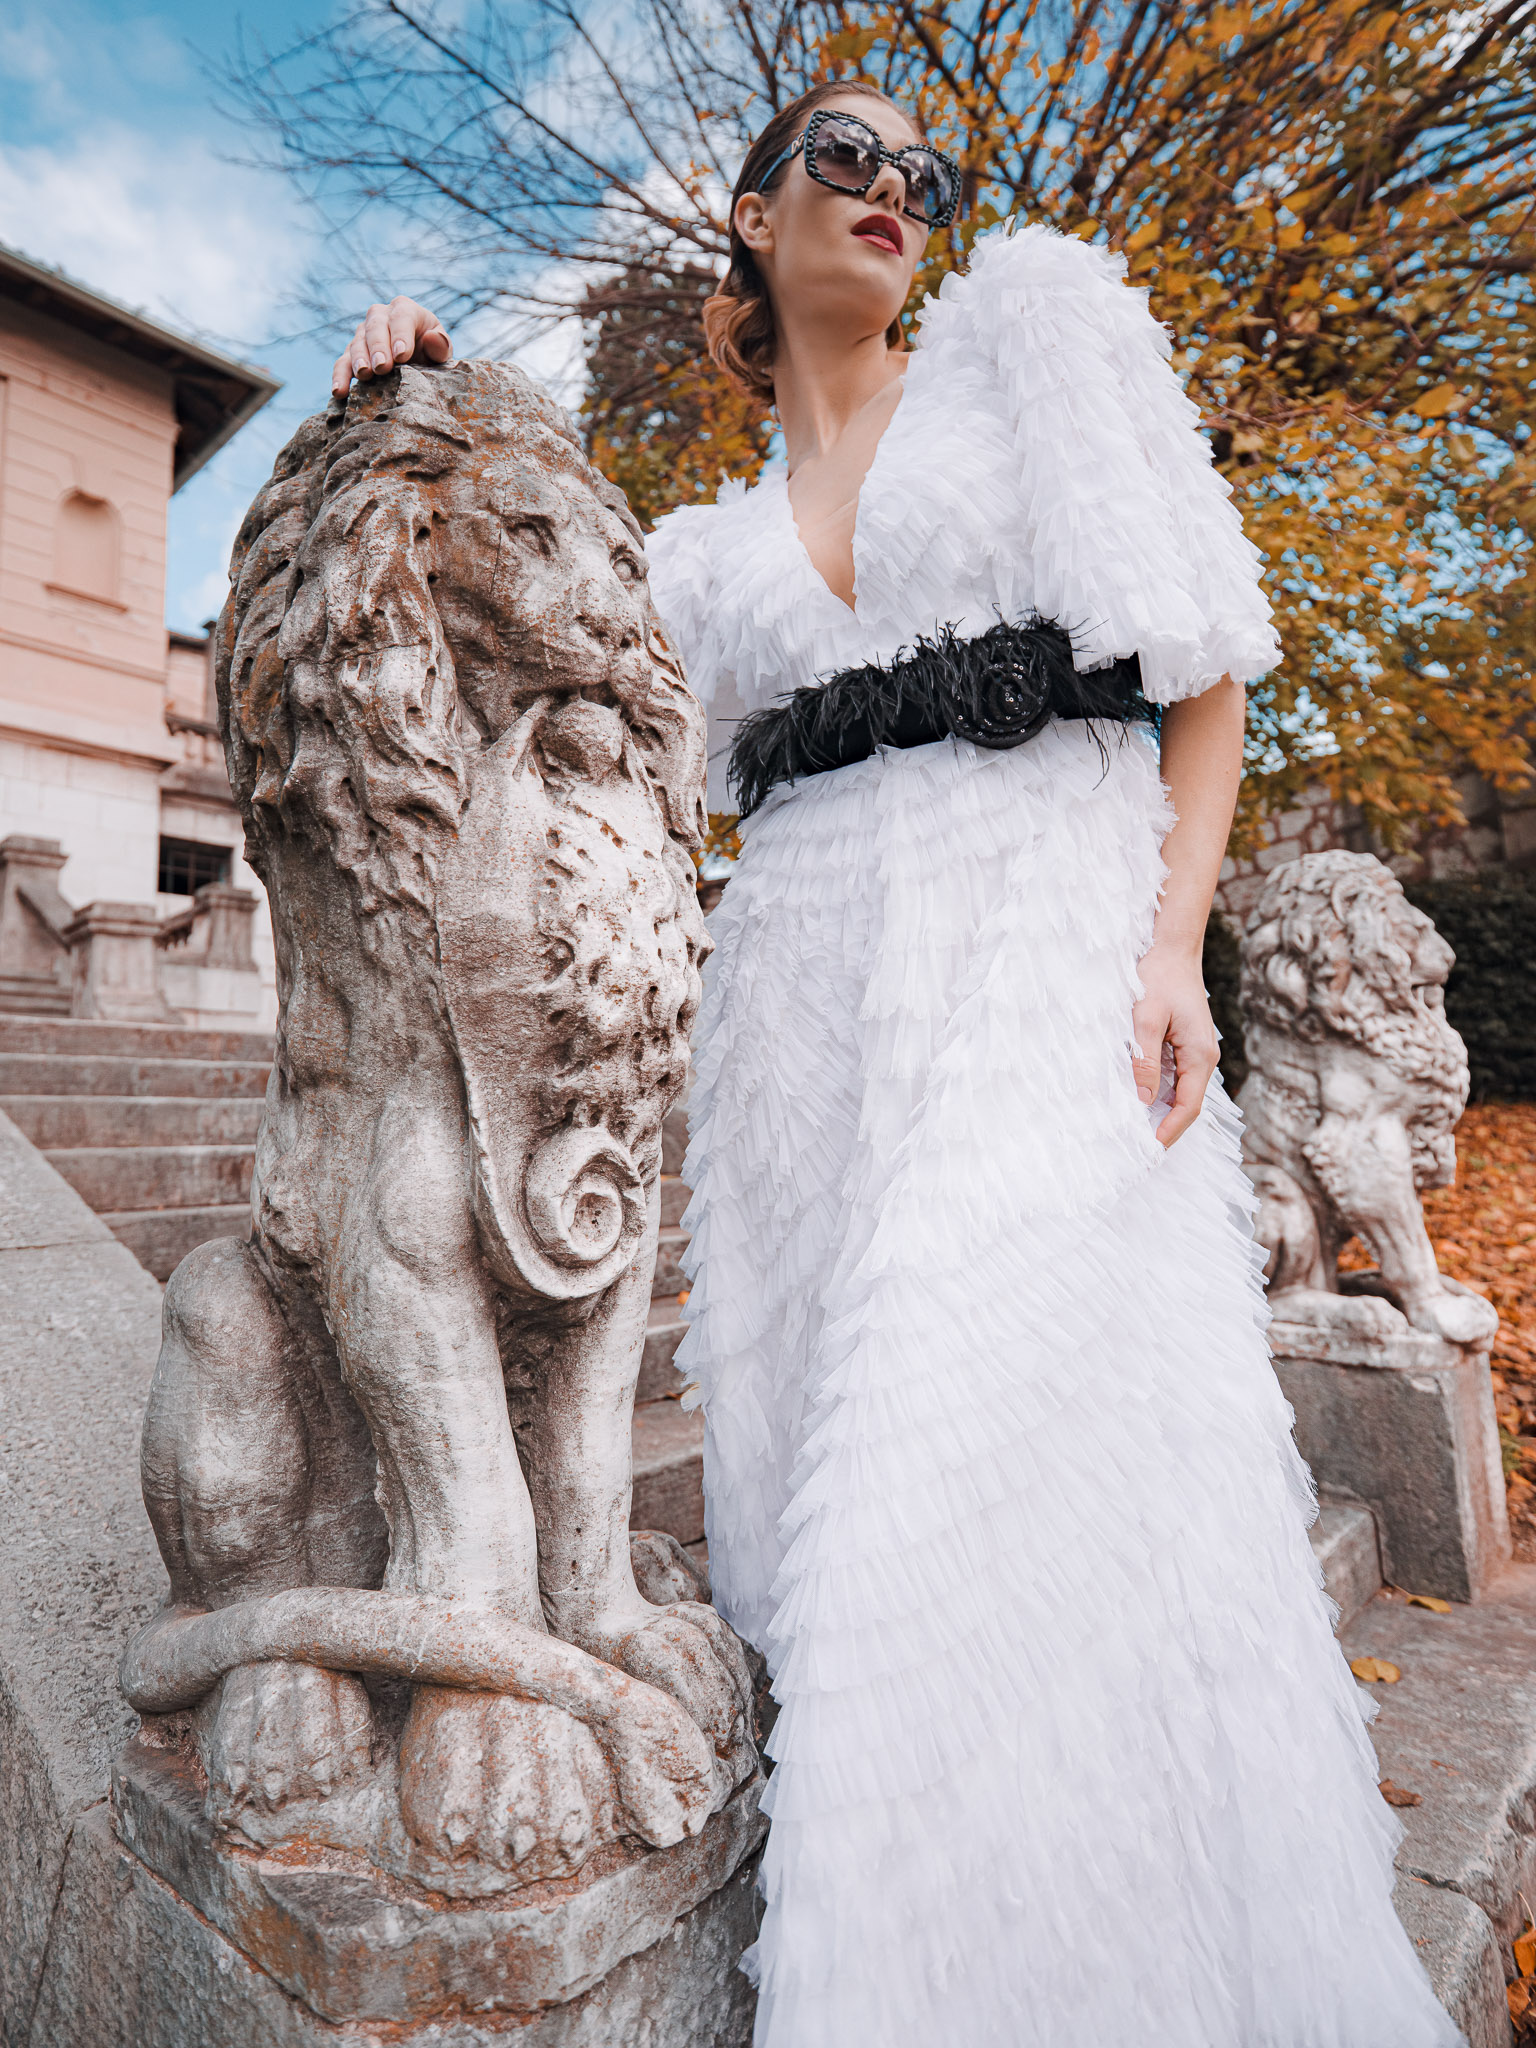 Extravagant Gala - najbolja domaća moda u foto/video kampanji